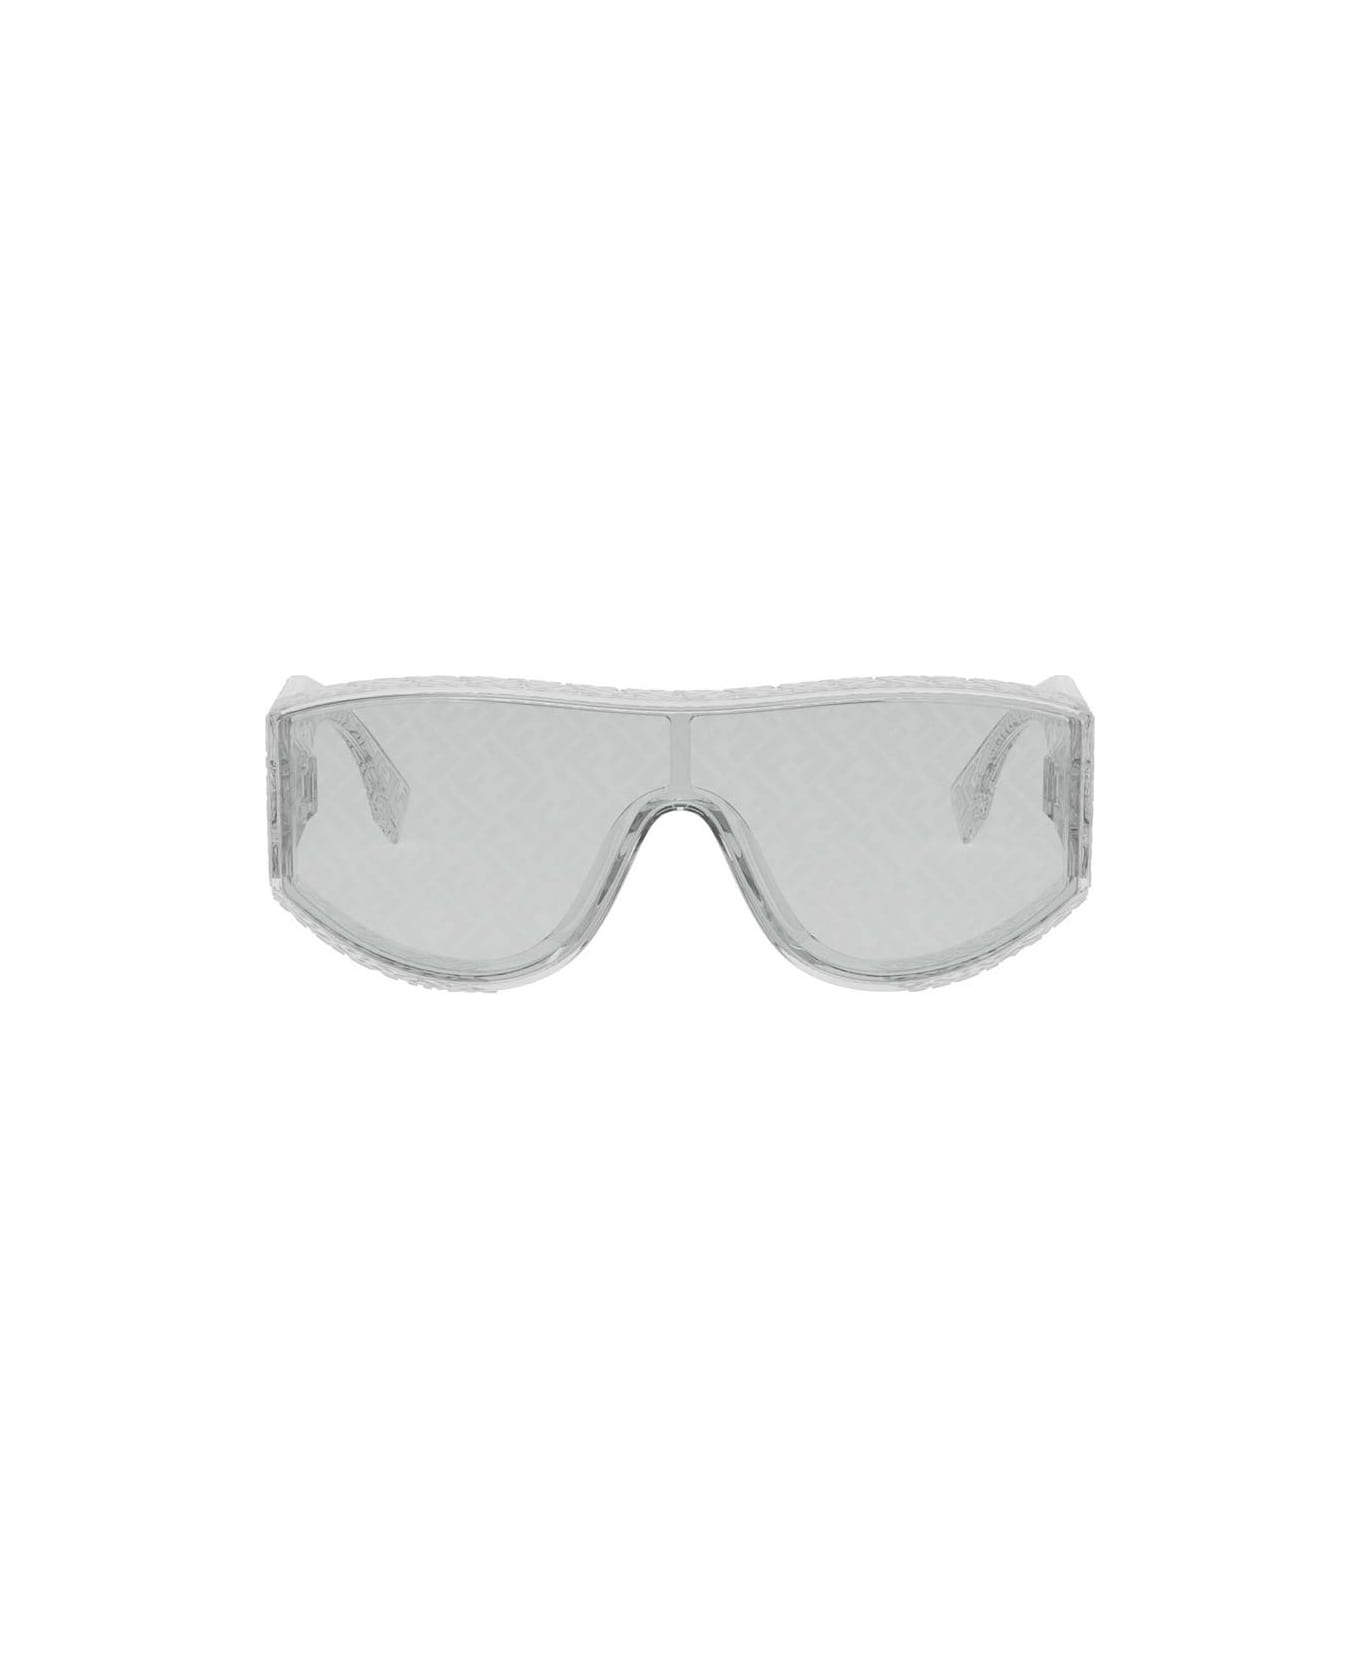 Fendi Eyewear Sunglasses - Trasparente/Silver